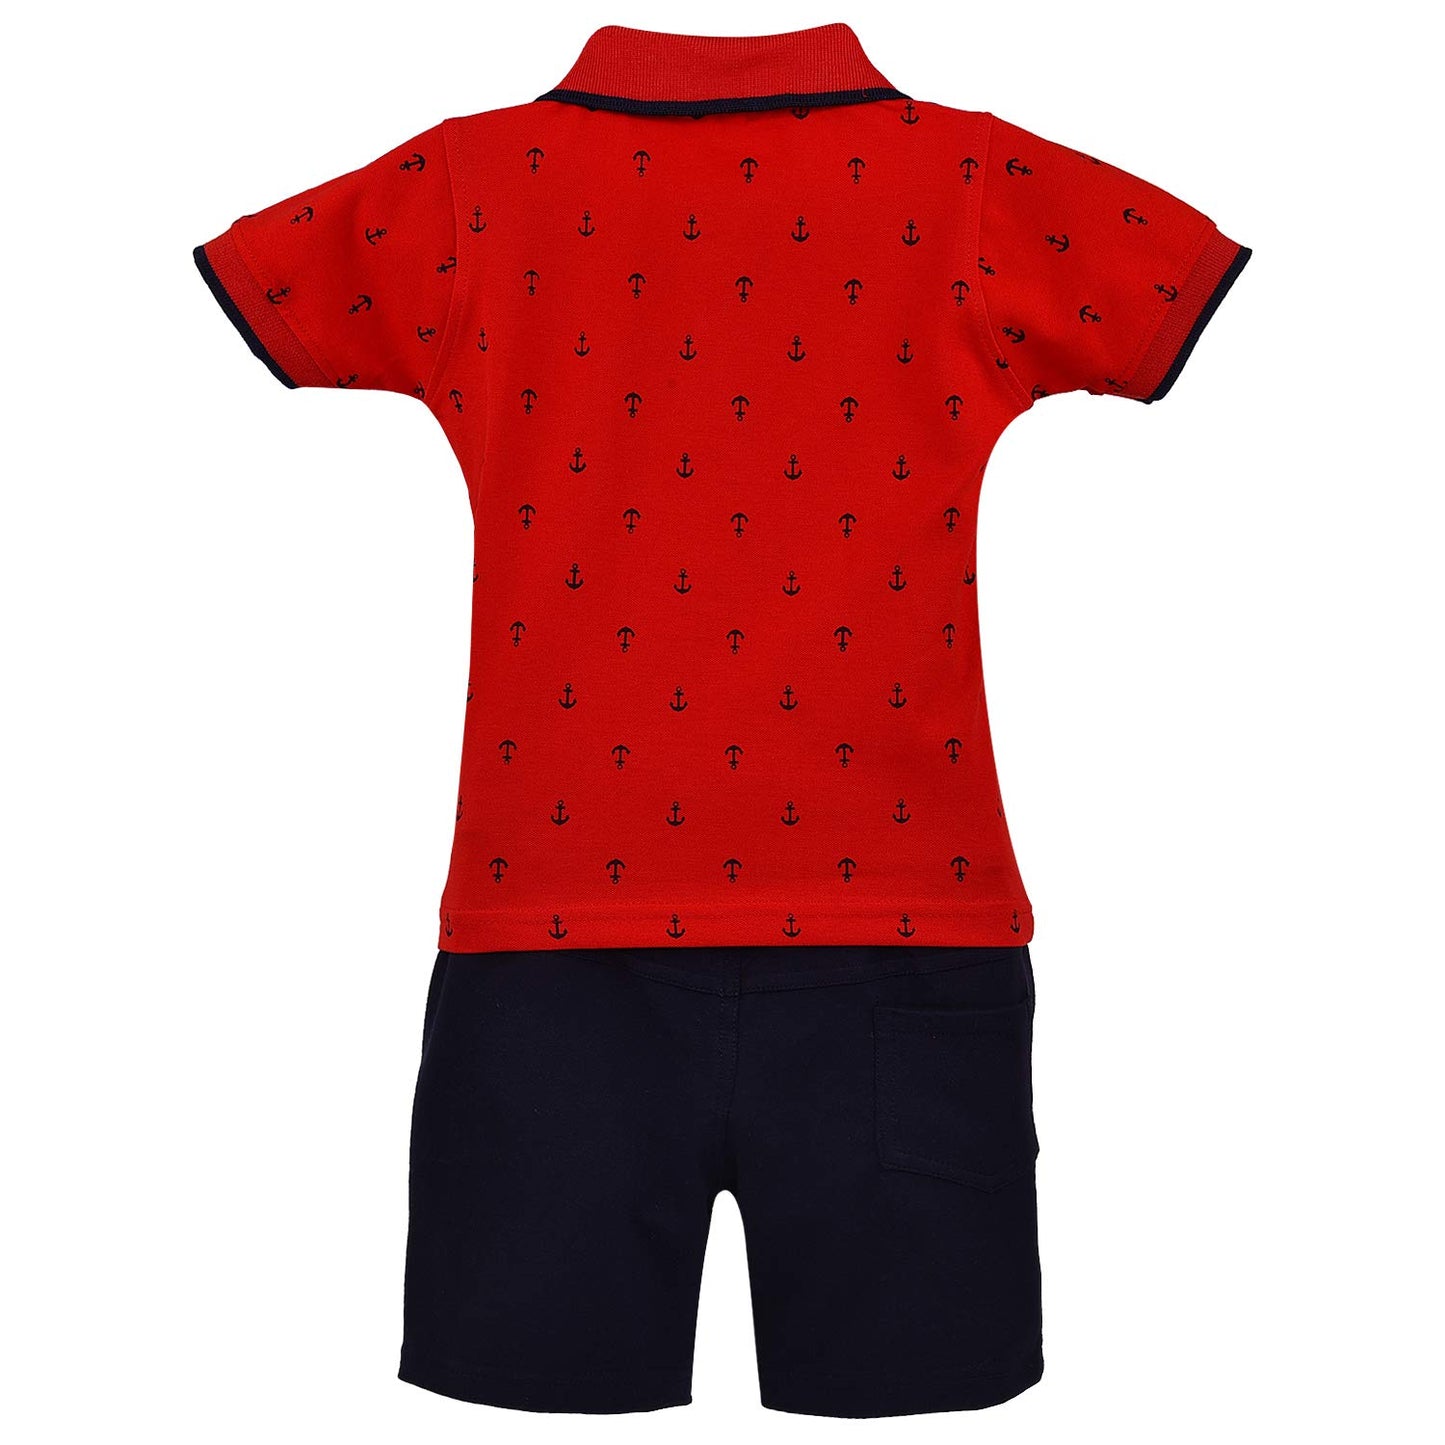 Wish Karo Unisex T-shirts-Shorts for Baby Boys- Girls Clothing Sets-(bt67rd)